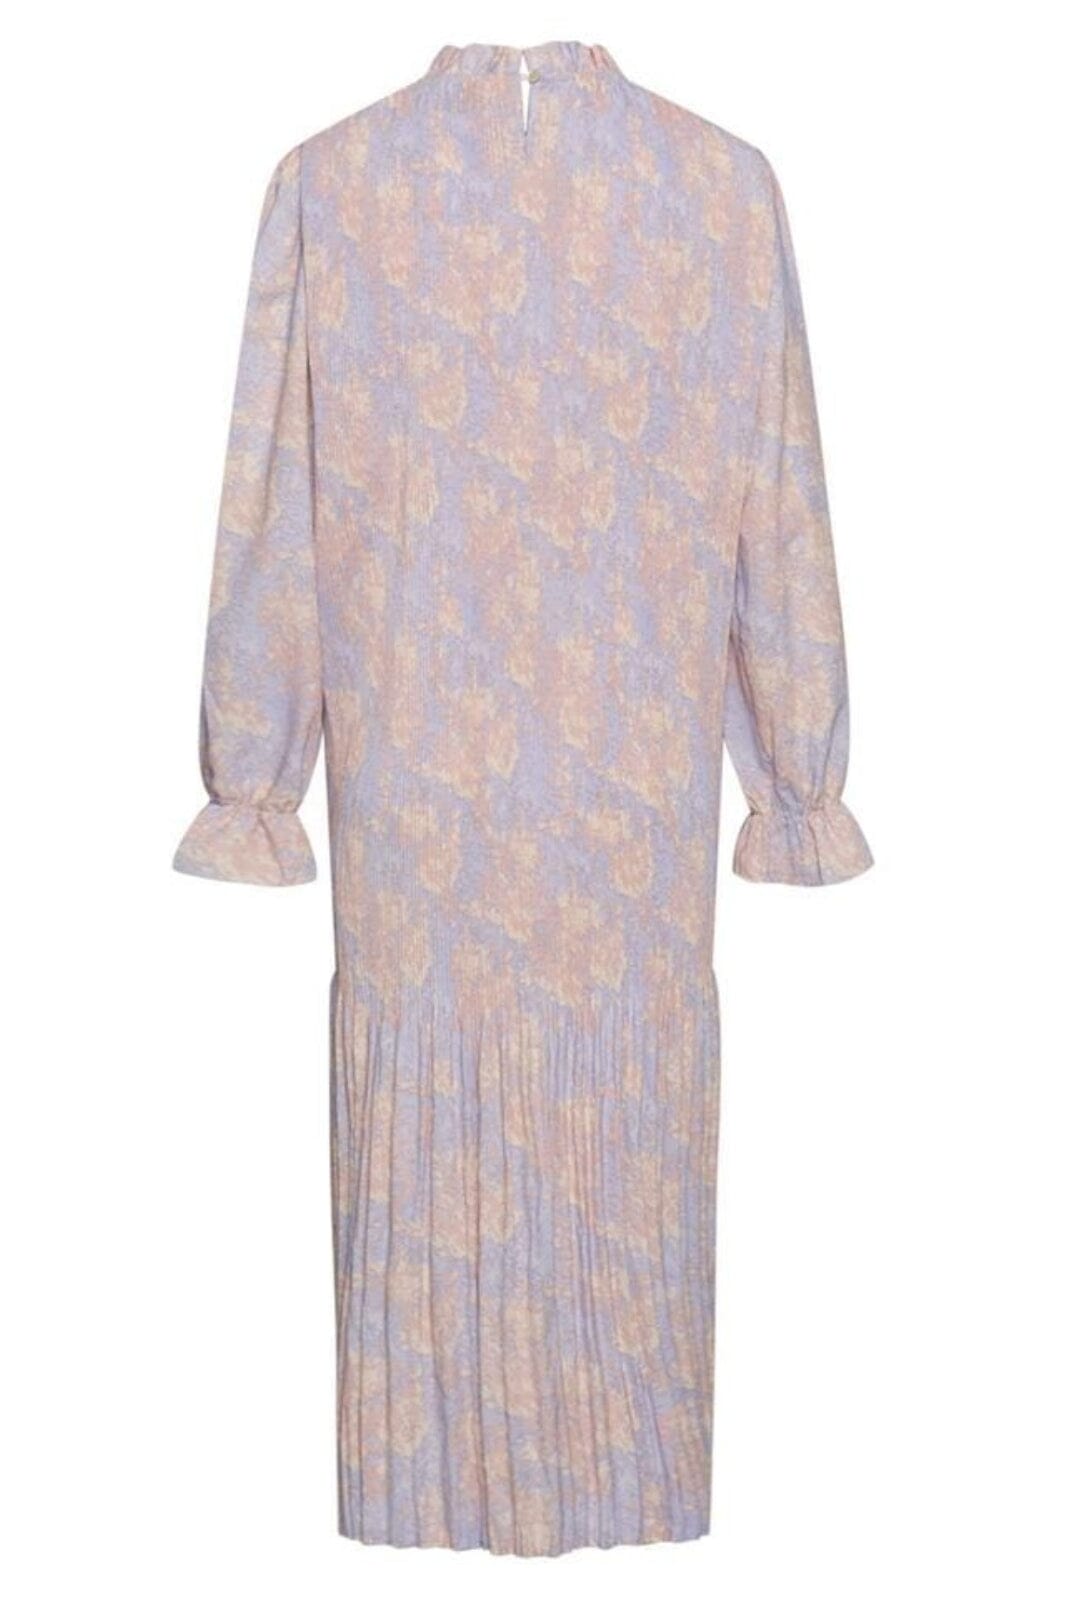 Noella - Rebecca Long Dress - Lavender/Apricot Print Kjoler 